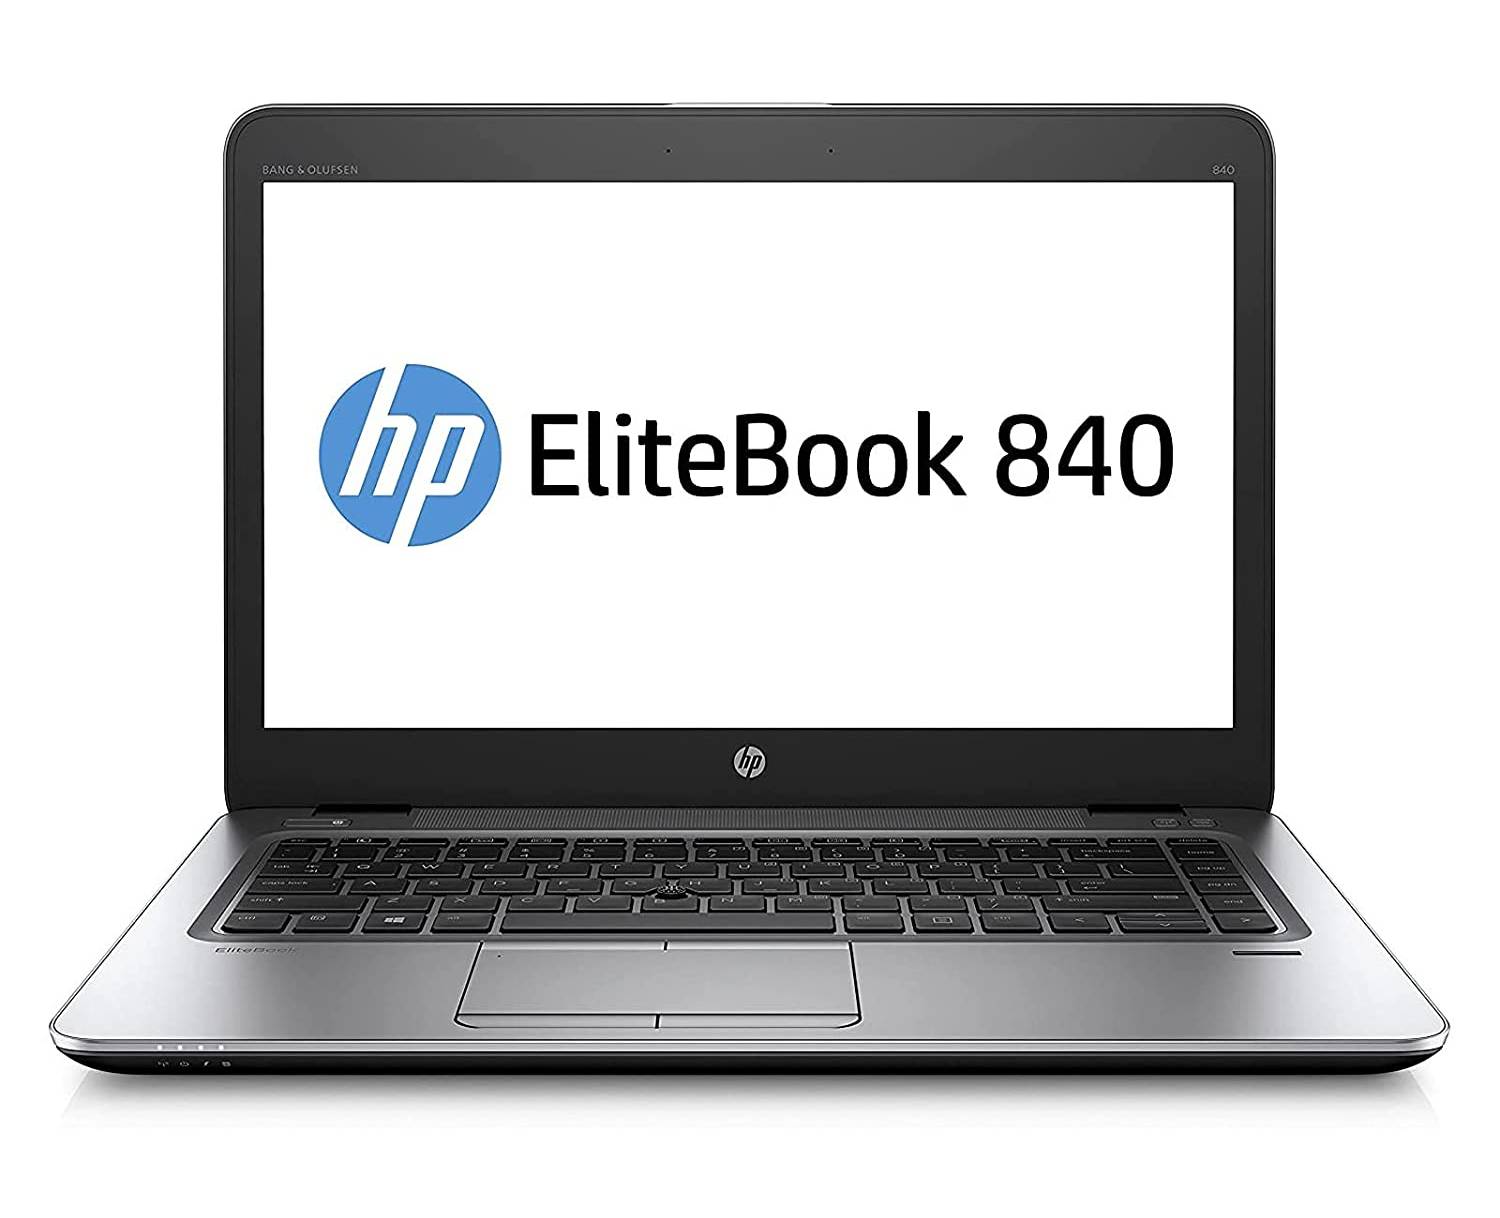 Ntb HP EliteBook 840 G3 i5-6300U / 8GB DDR4 / 128GB / 14" / Full HD AntiGlare / bez mechaniky / stříbrná / ZÁNOVNÍ